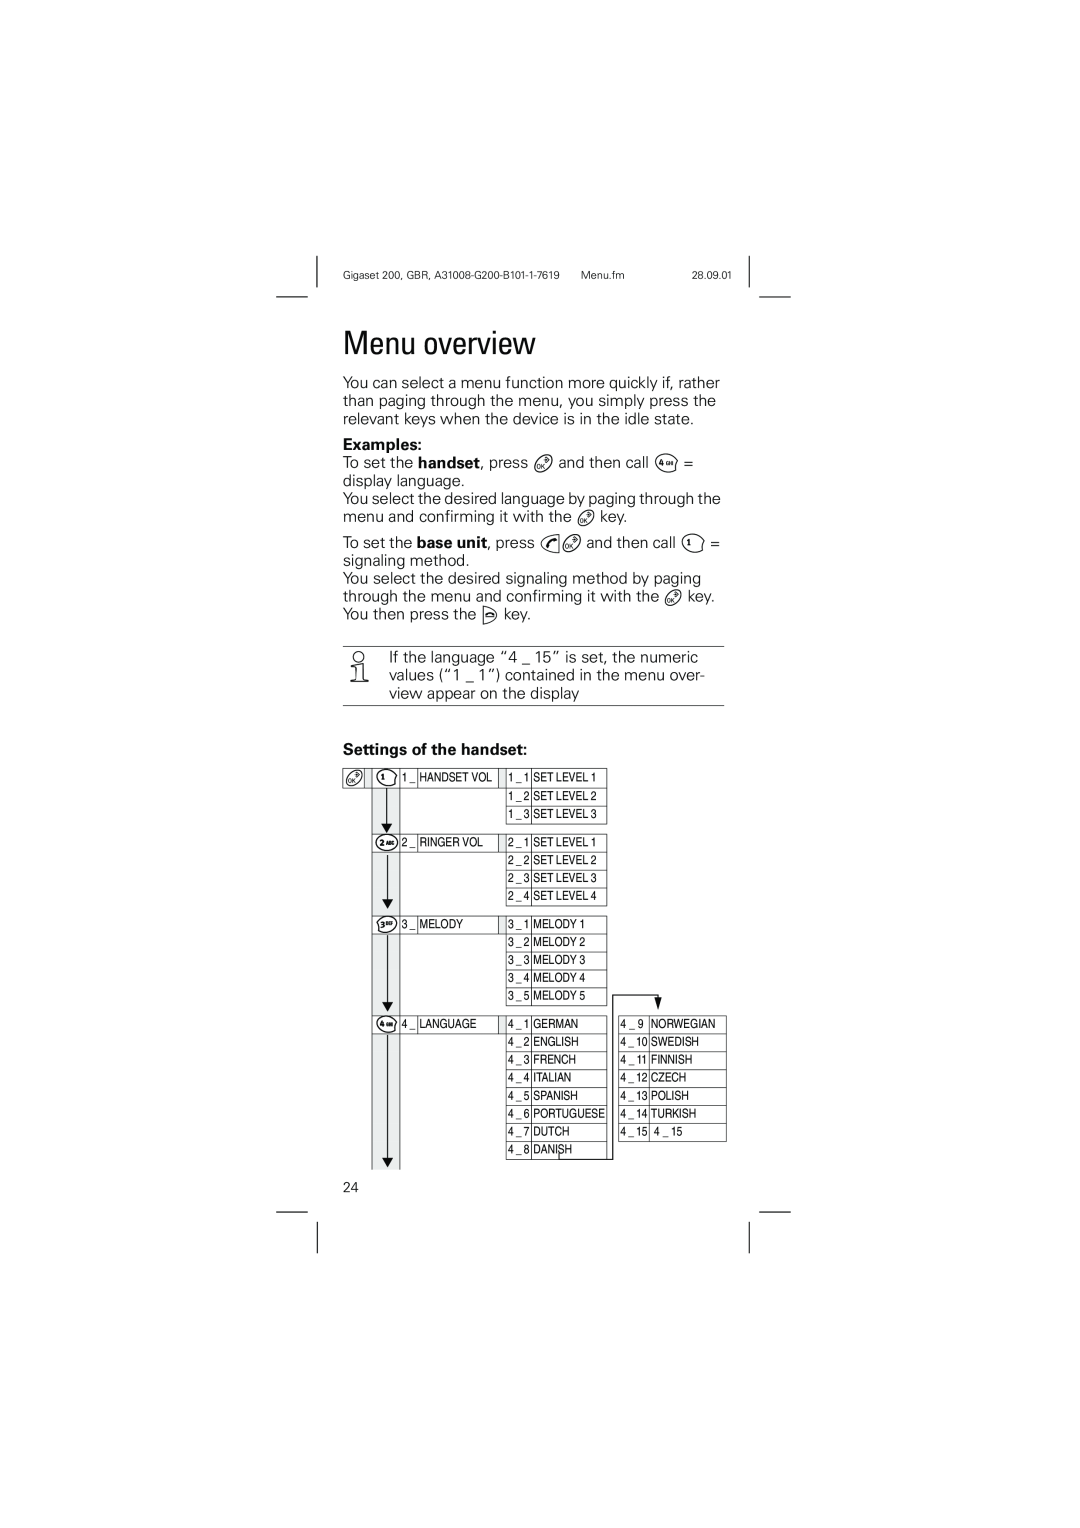 Siemens 200 manual Menu overview, Examples, Settings of the handset 